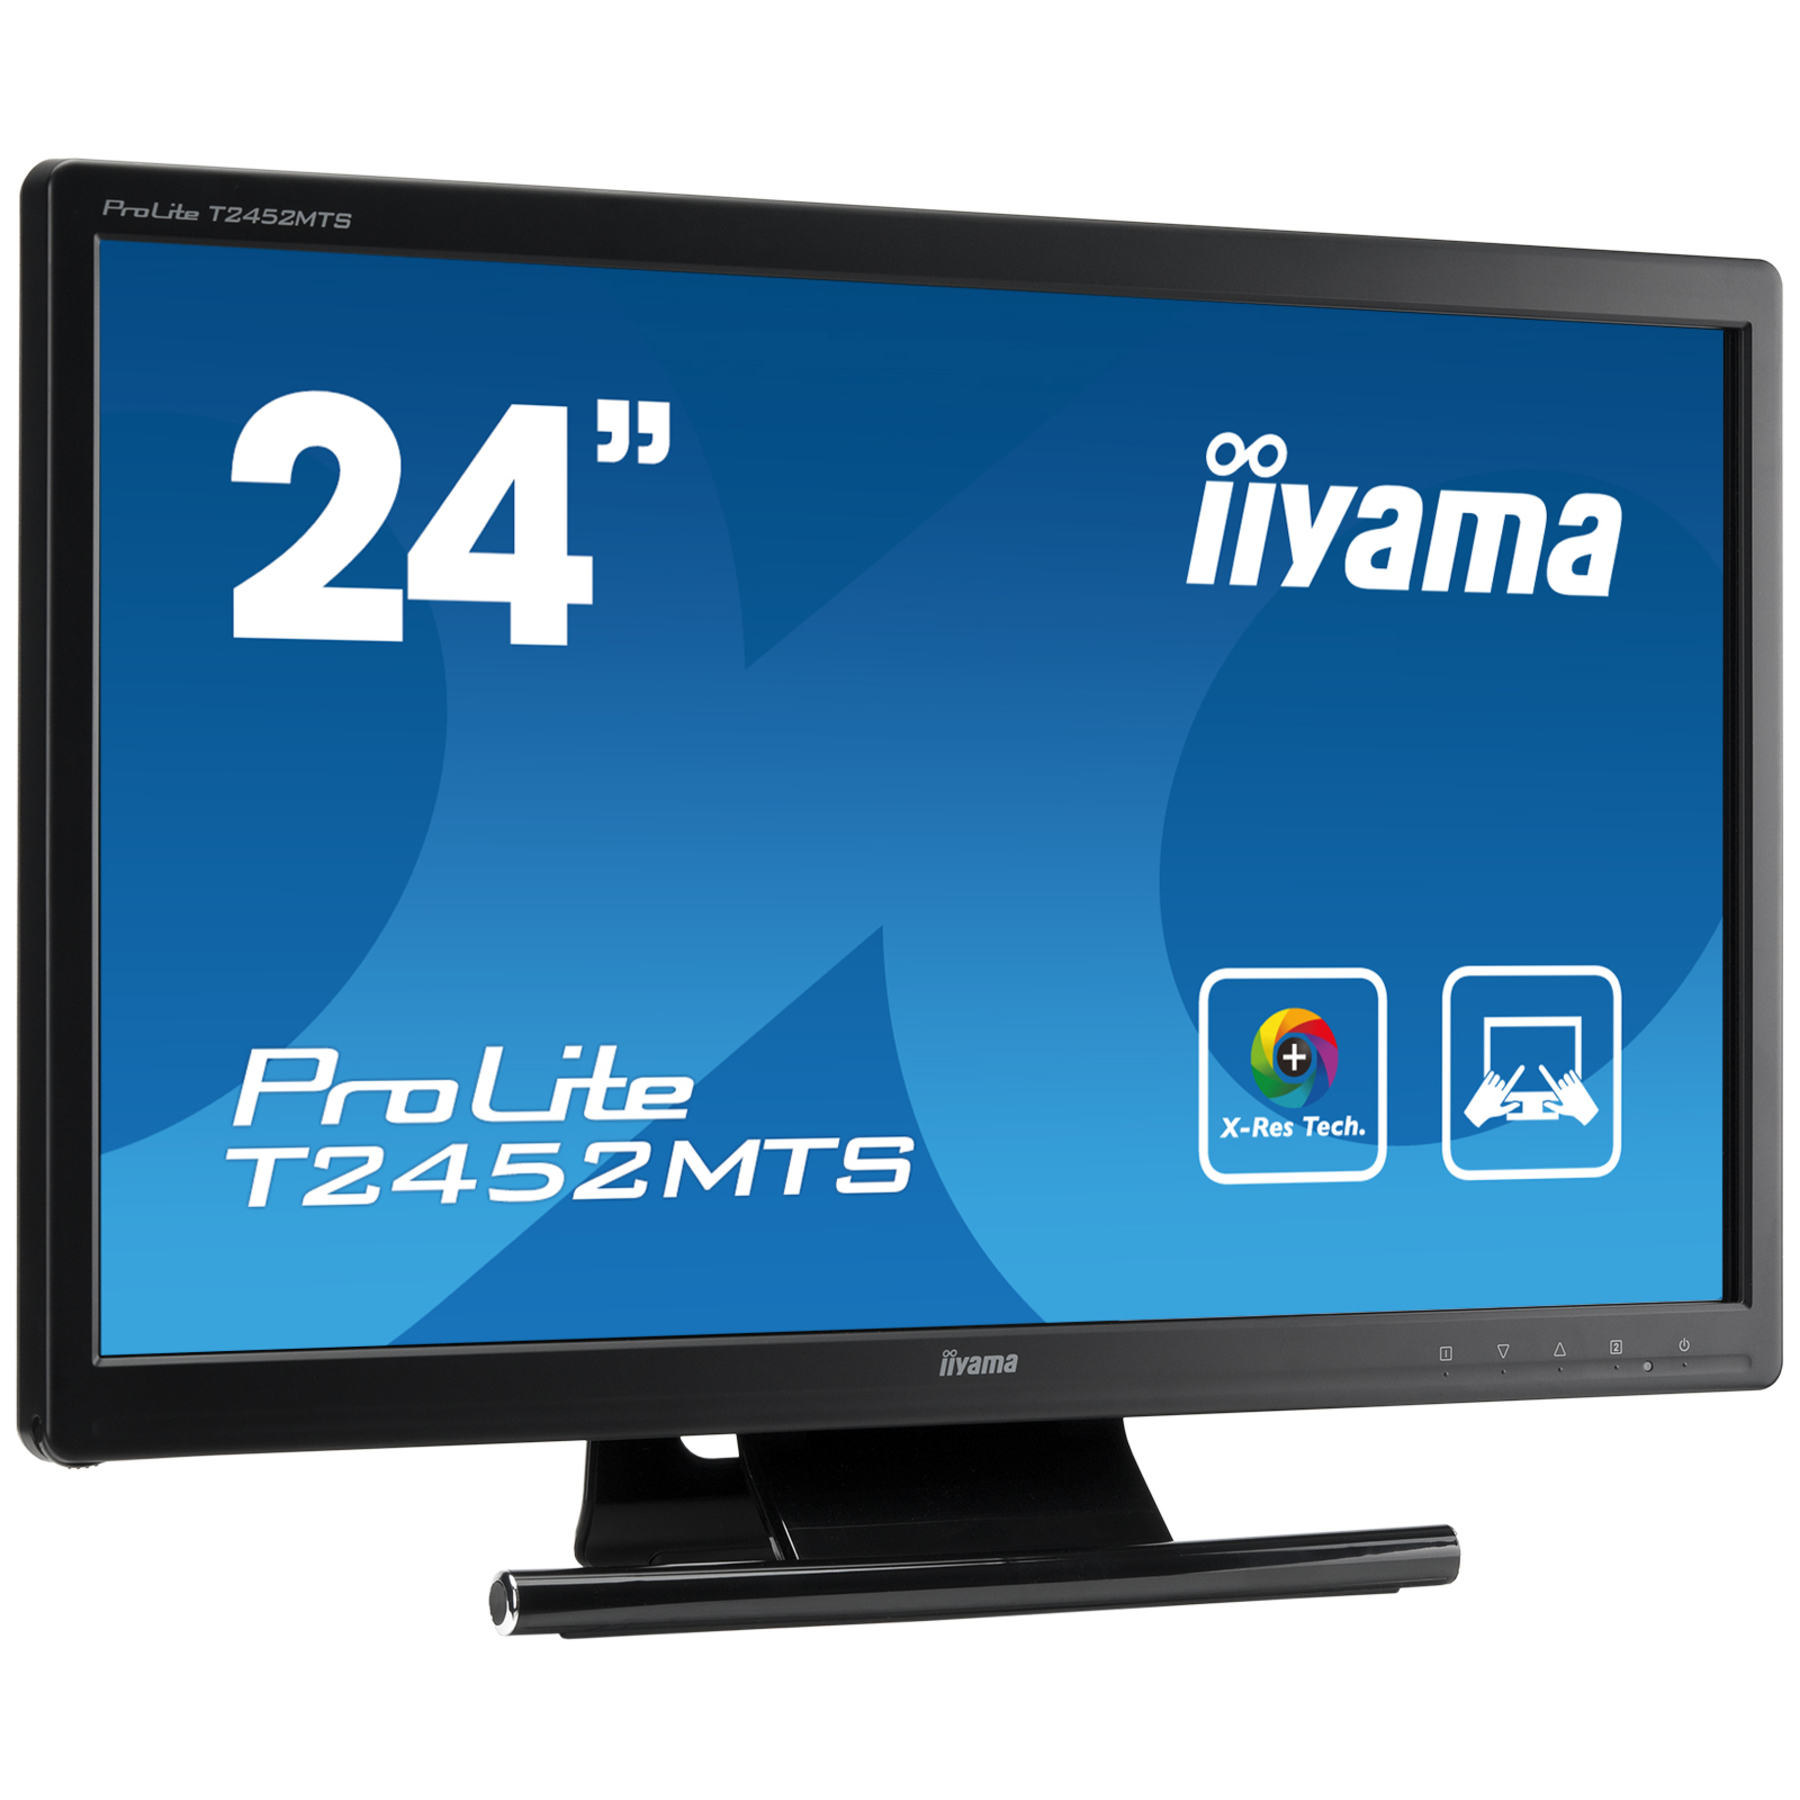 Iiyama Prolite T2452mts 24 Inch Touchscreen Monitor Cash Drawers Ireland